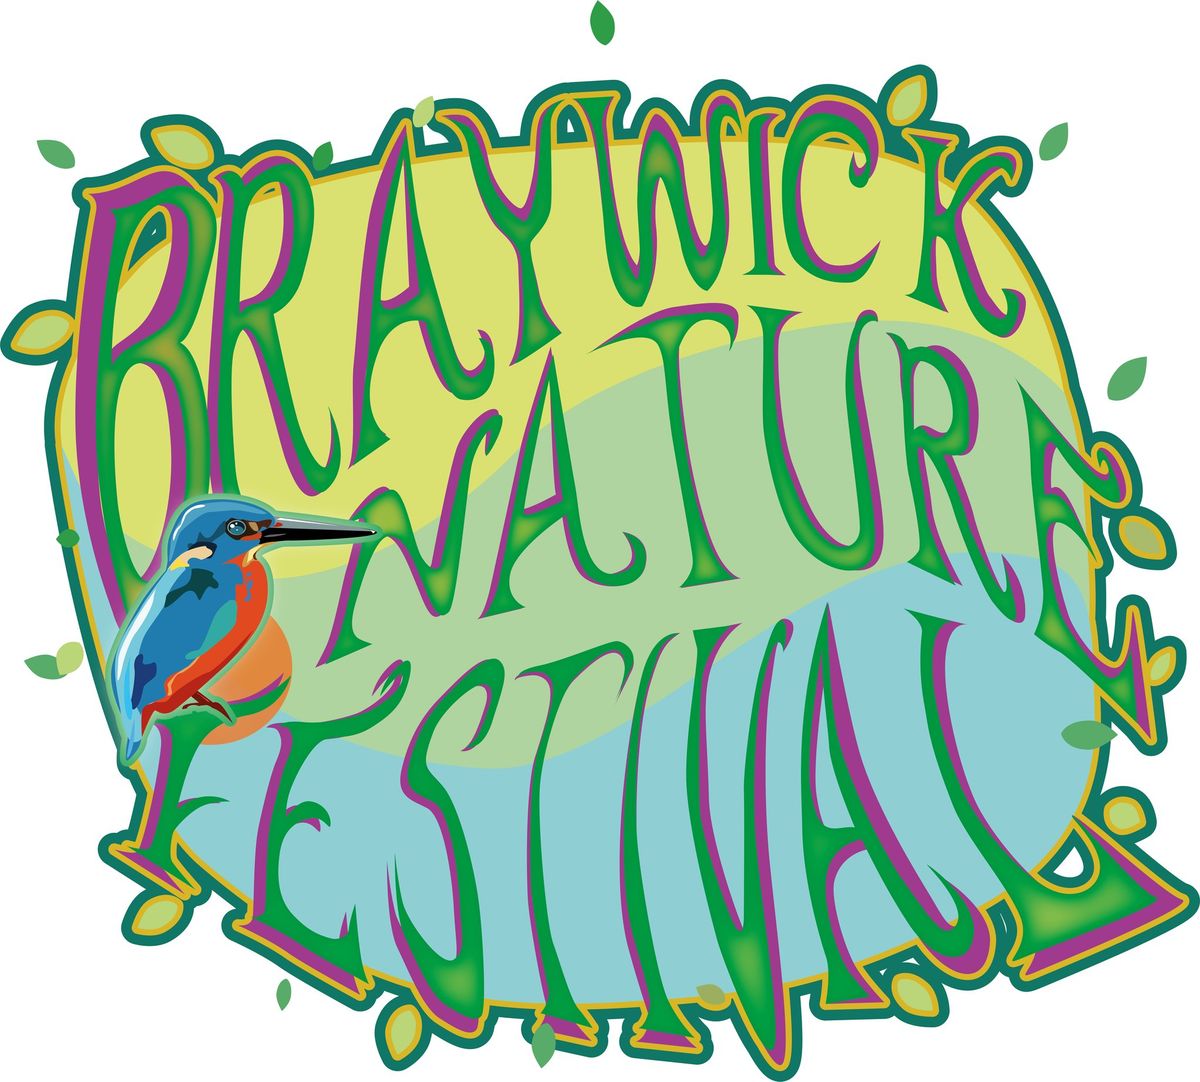 Braywick Nature Festival - Day 2 SATURDAY